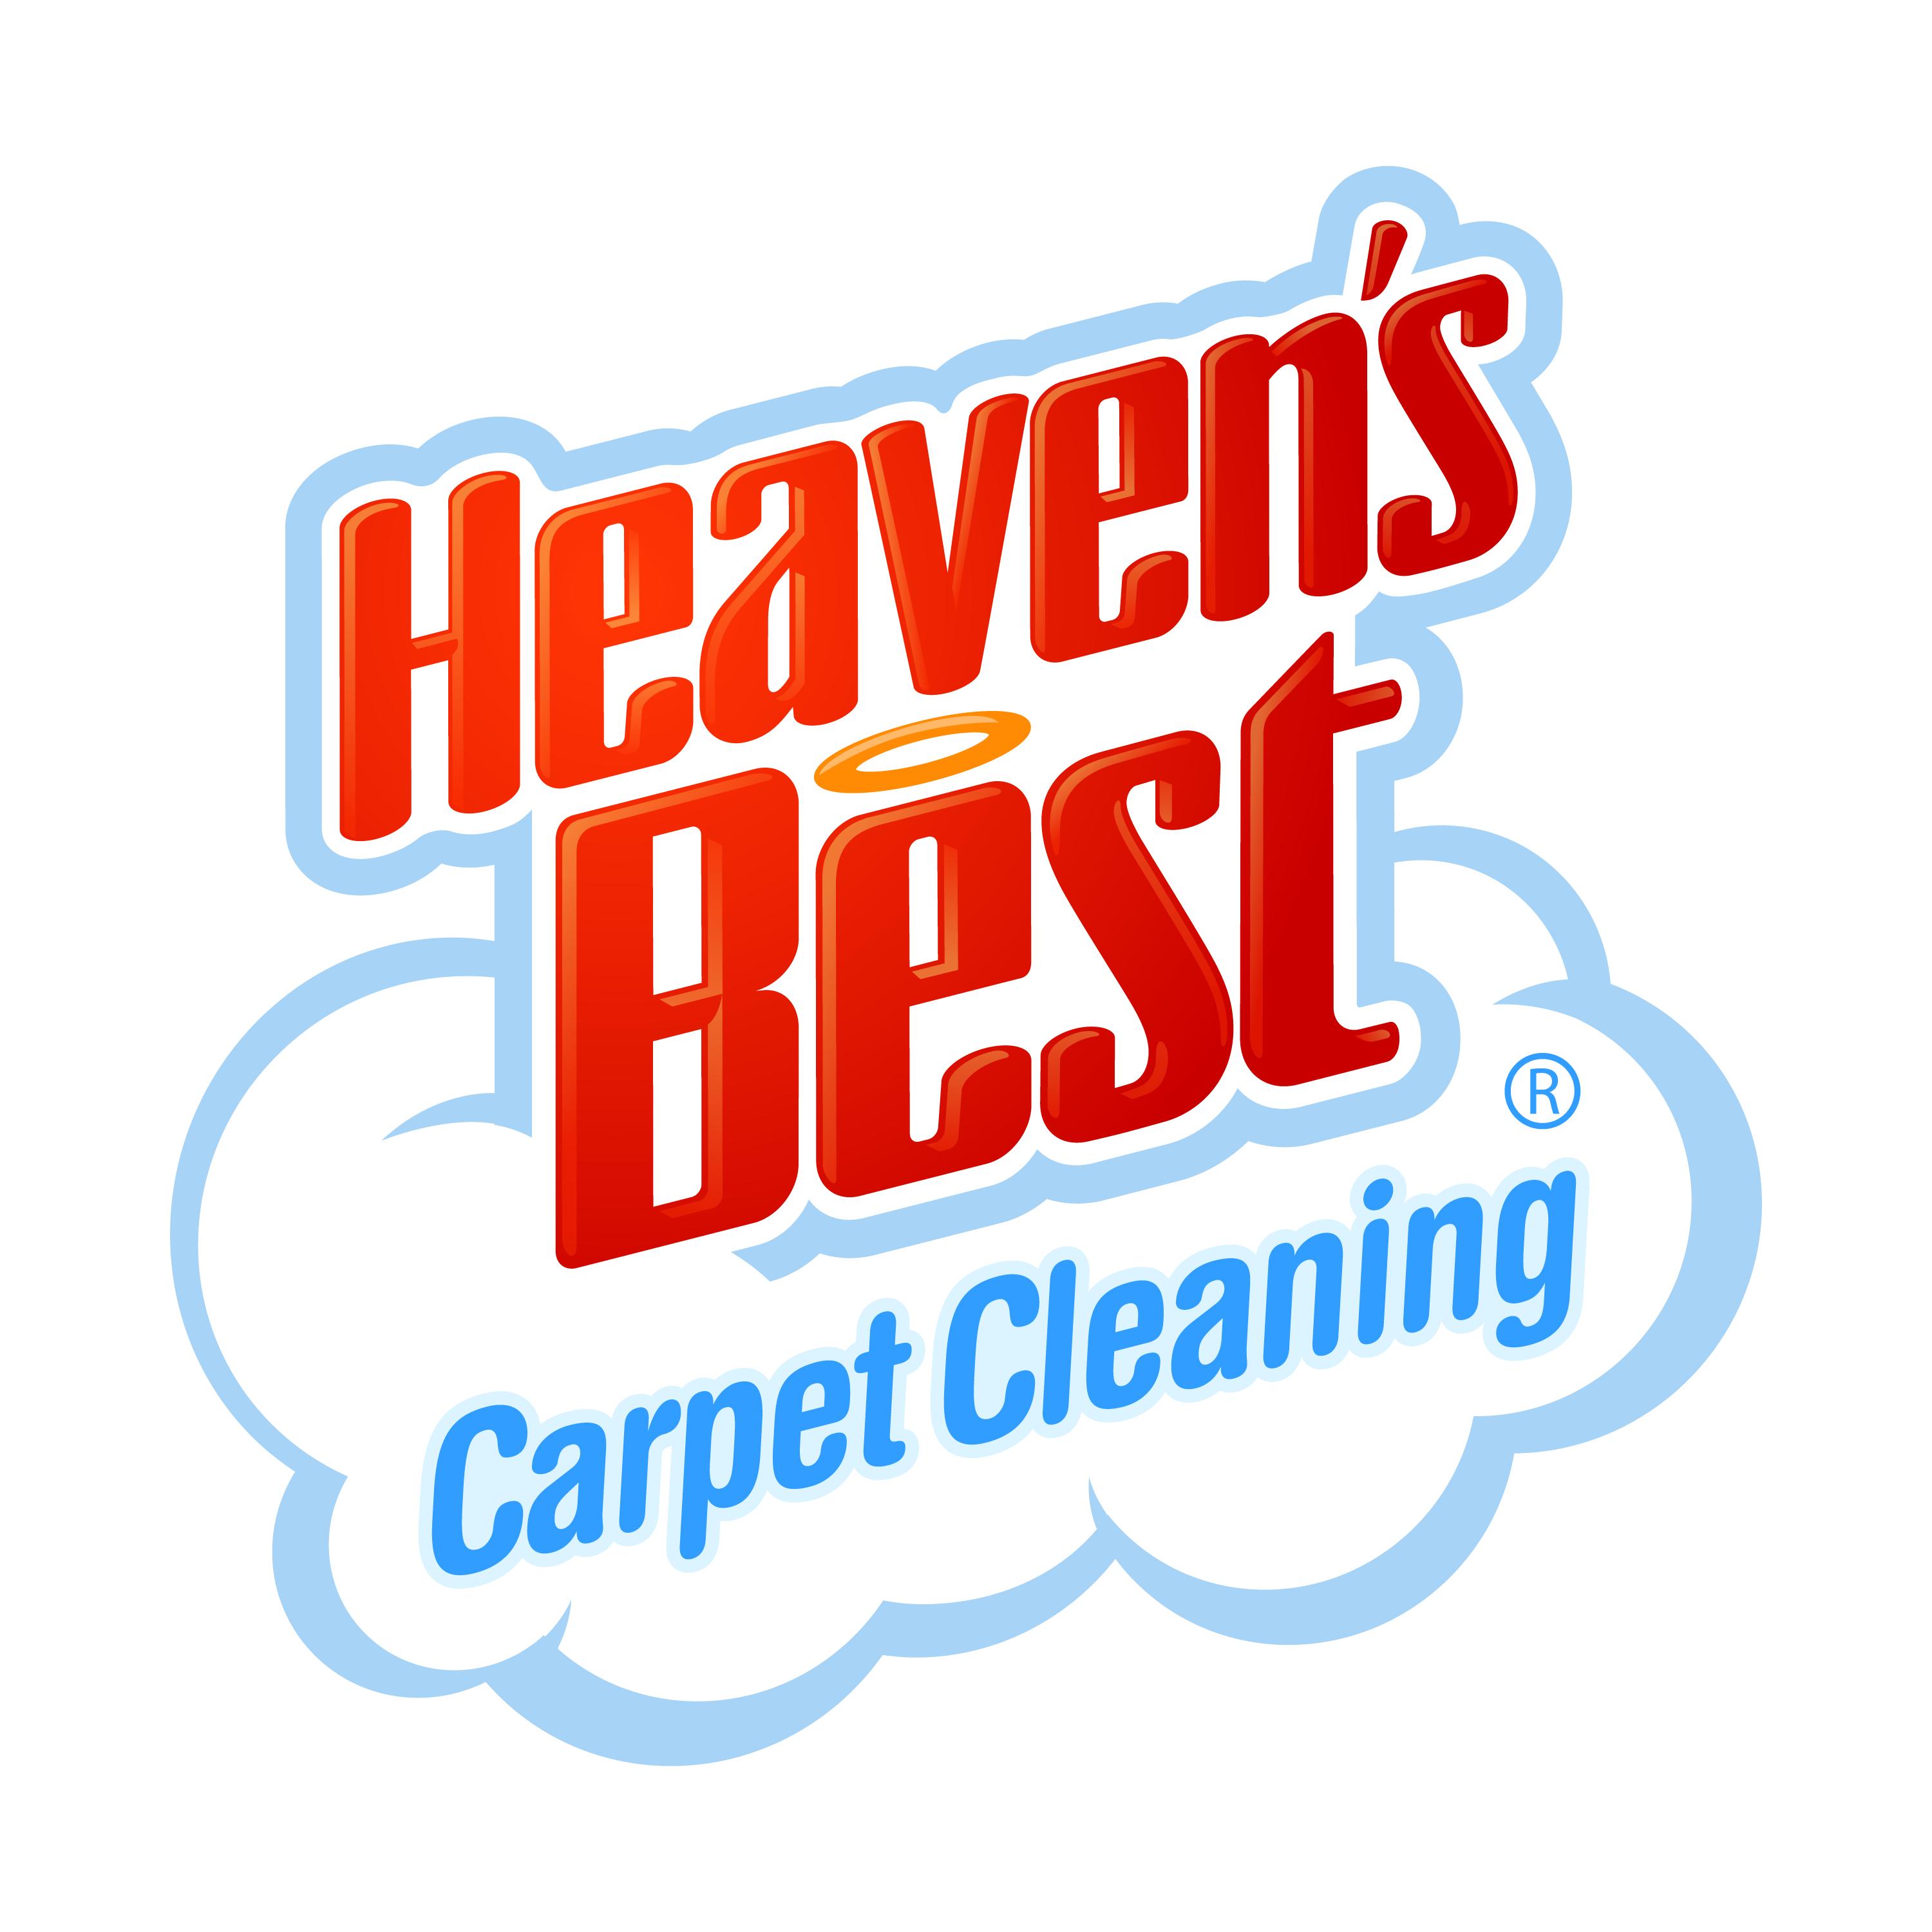 Heaven’s Best Carpet Cleaning